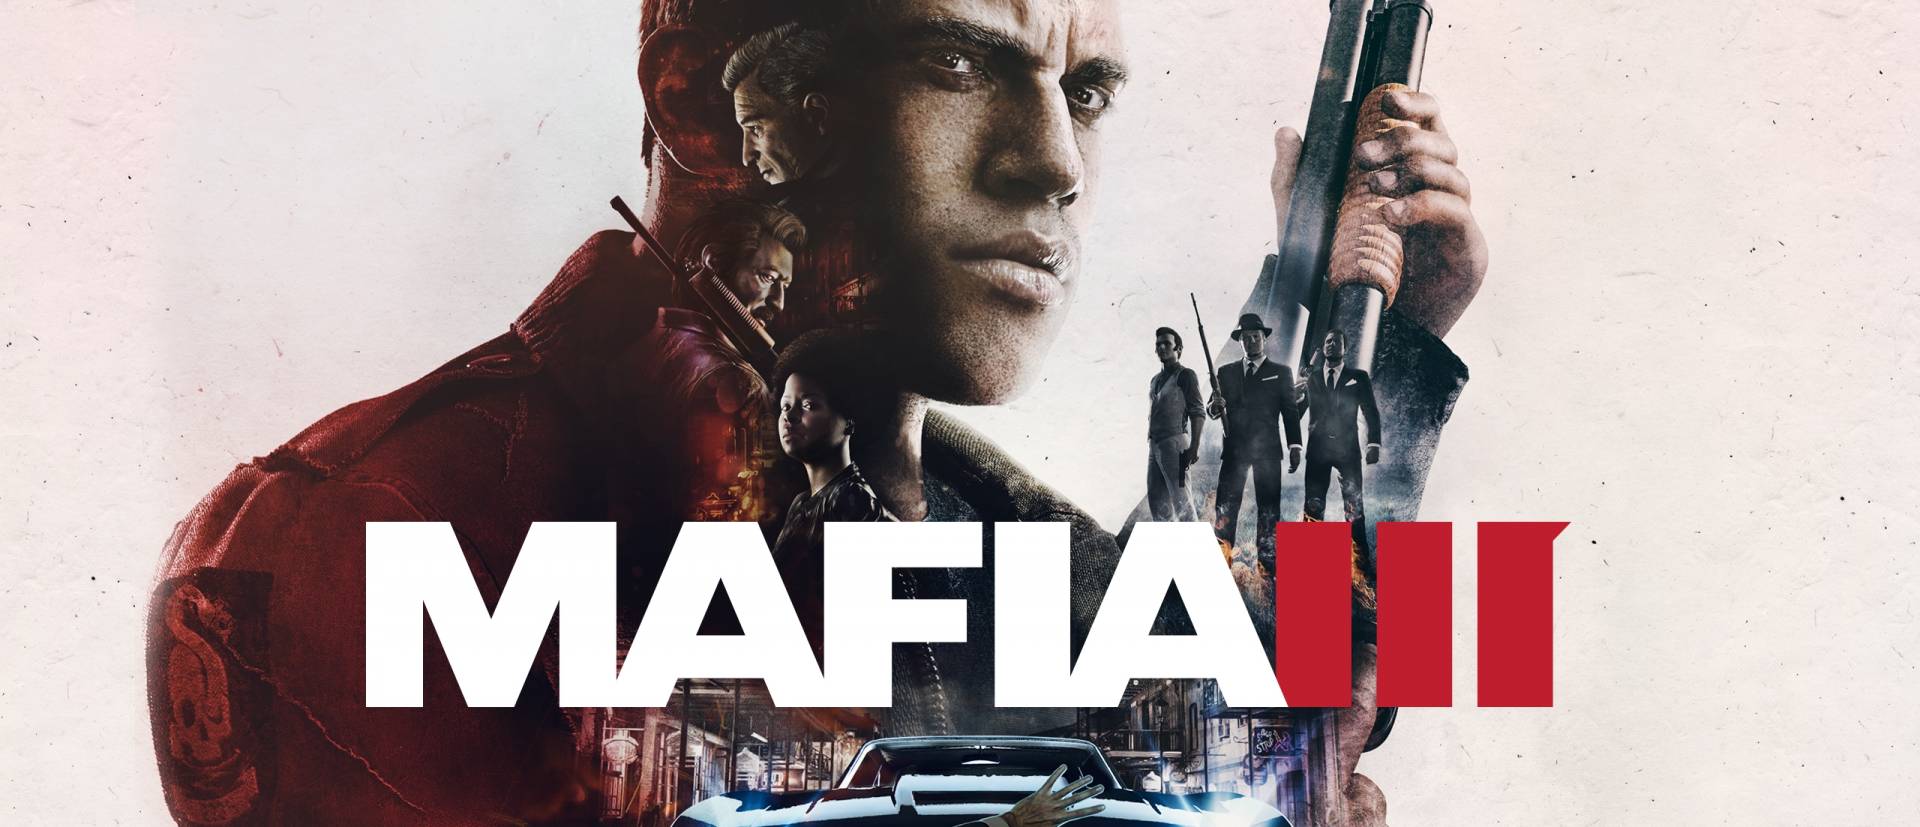 Mafia III Story trailer